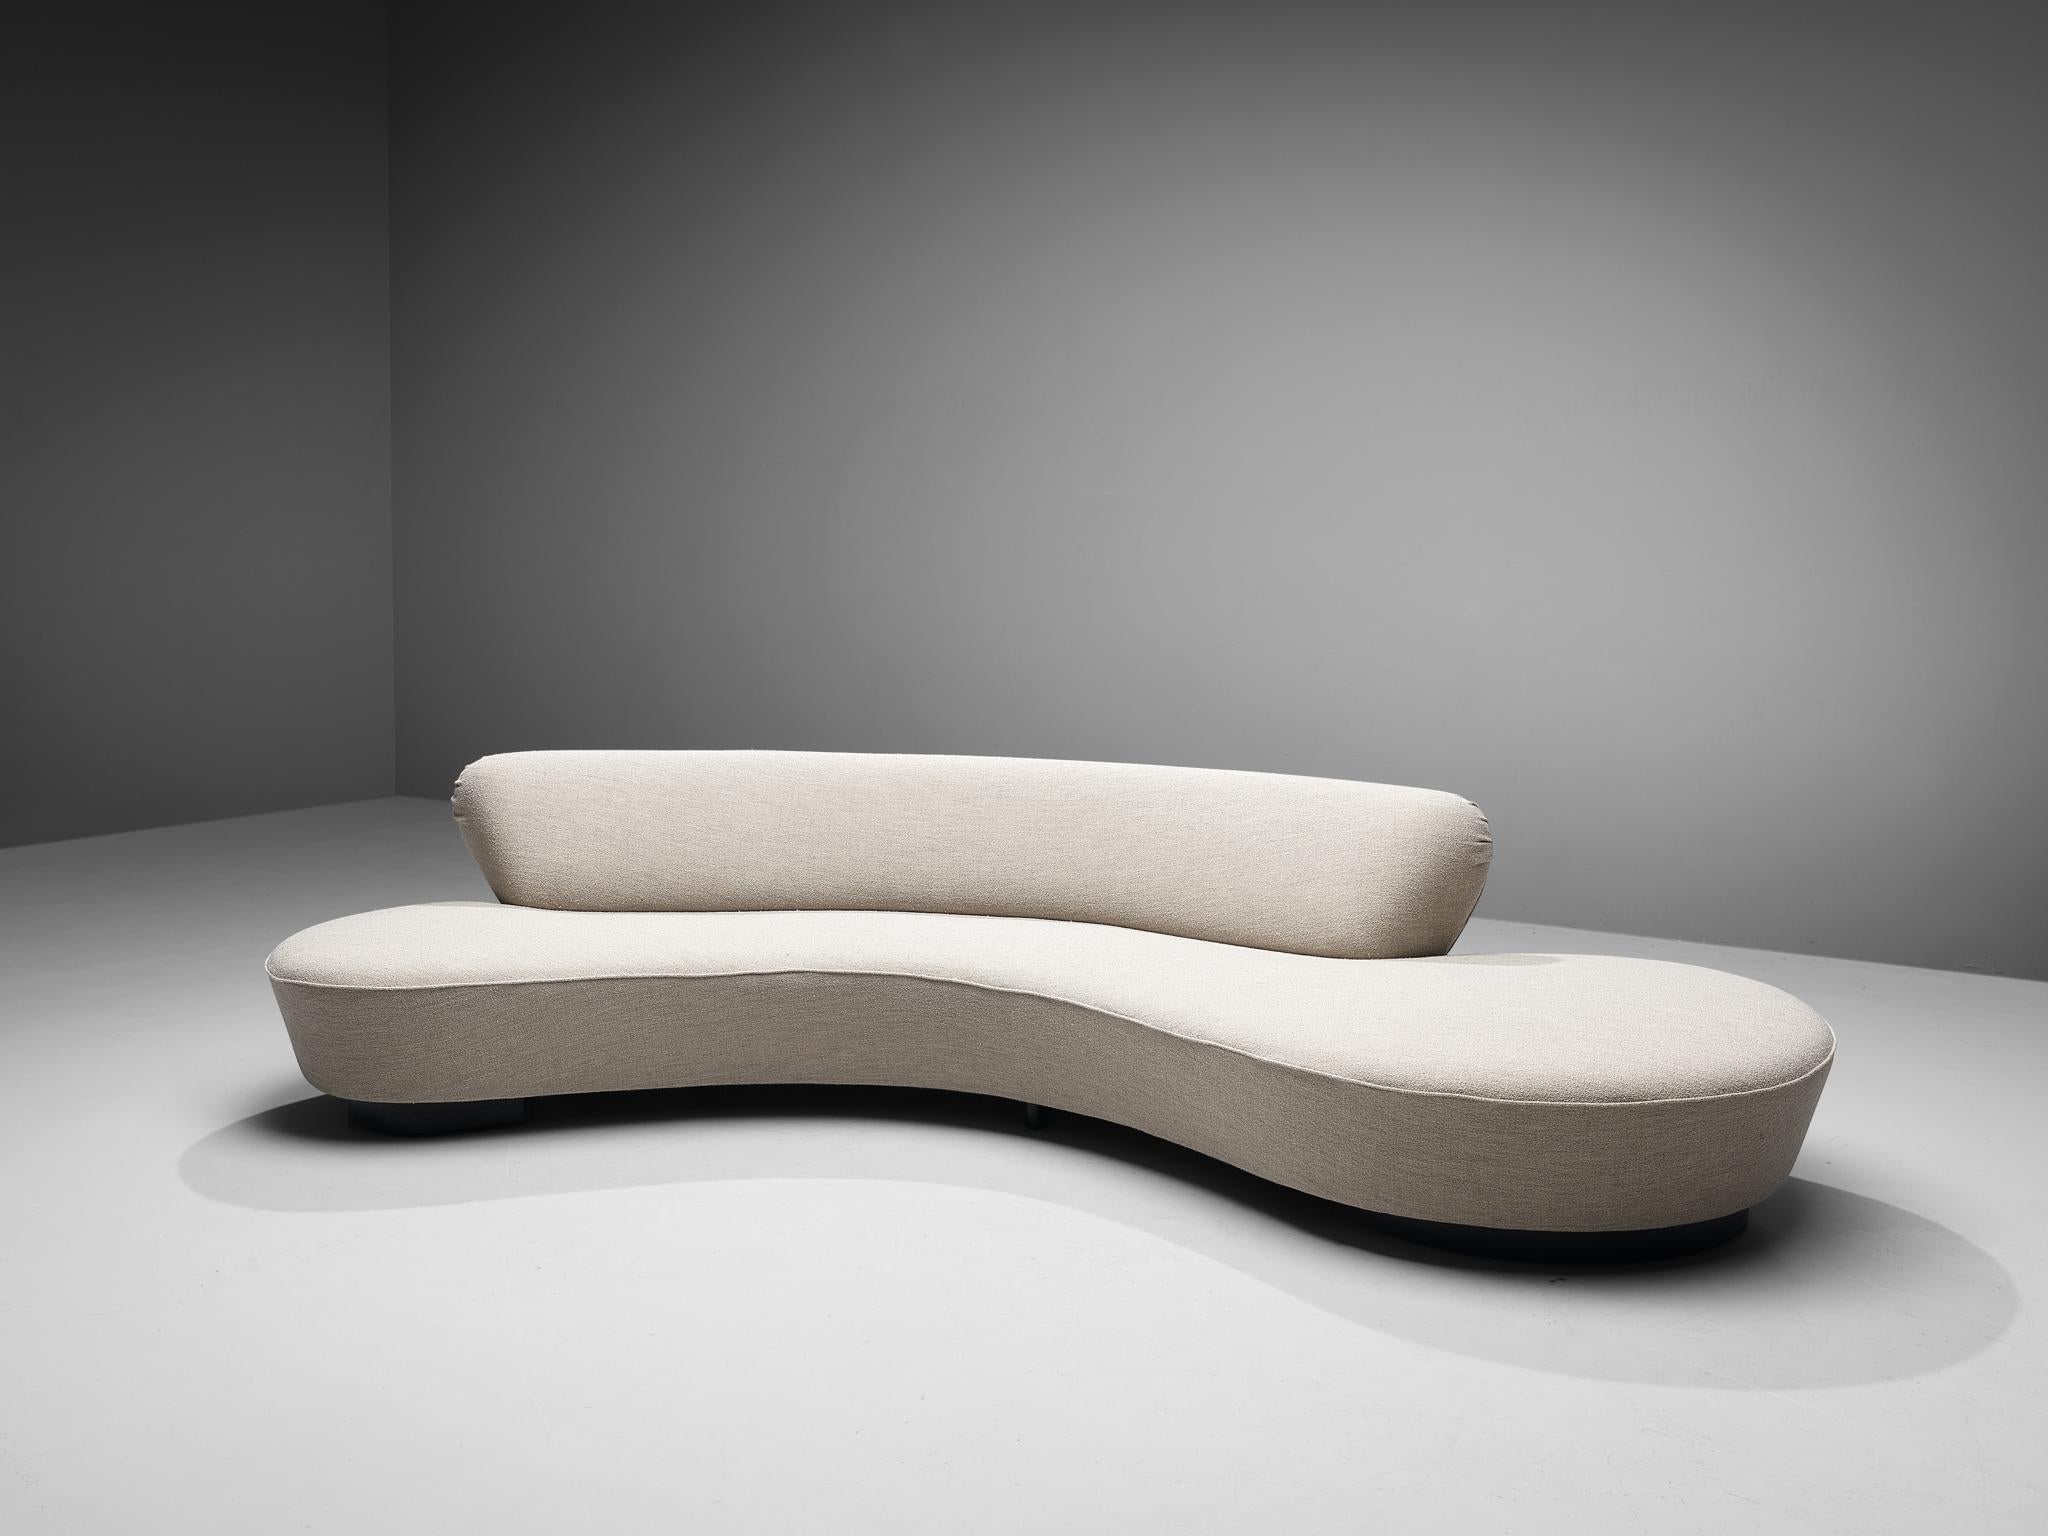 Iconic Vladimir Kagan ‘Serpentine’ Sofa in White Upholstery 1